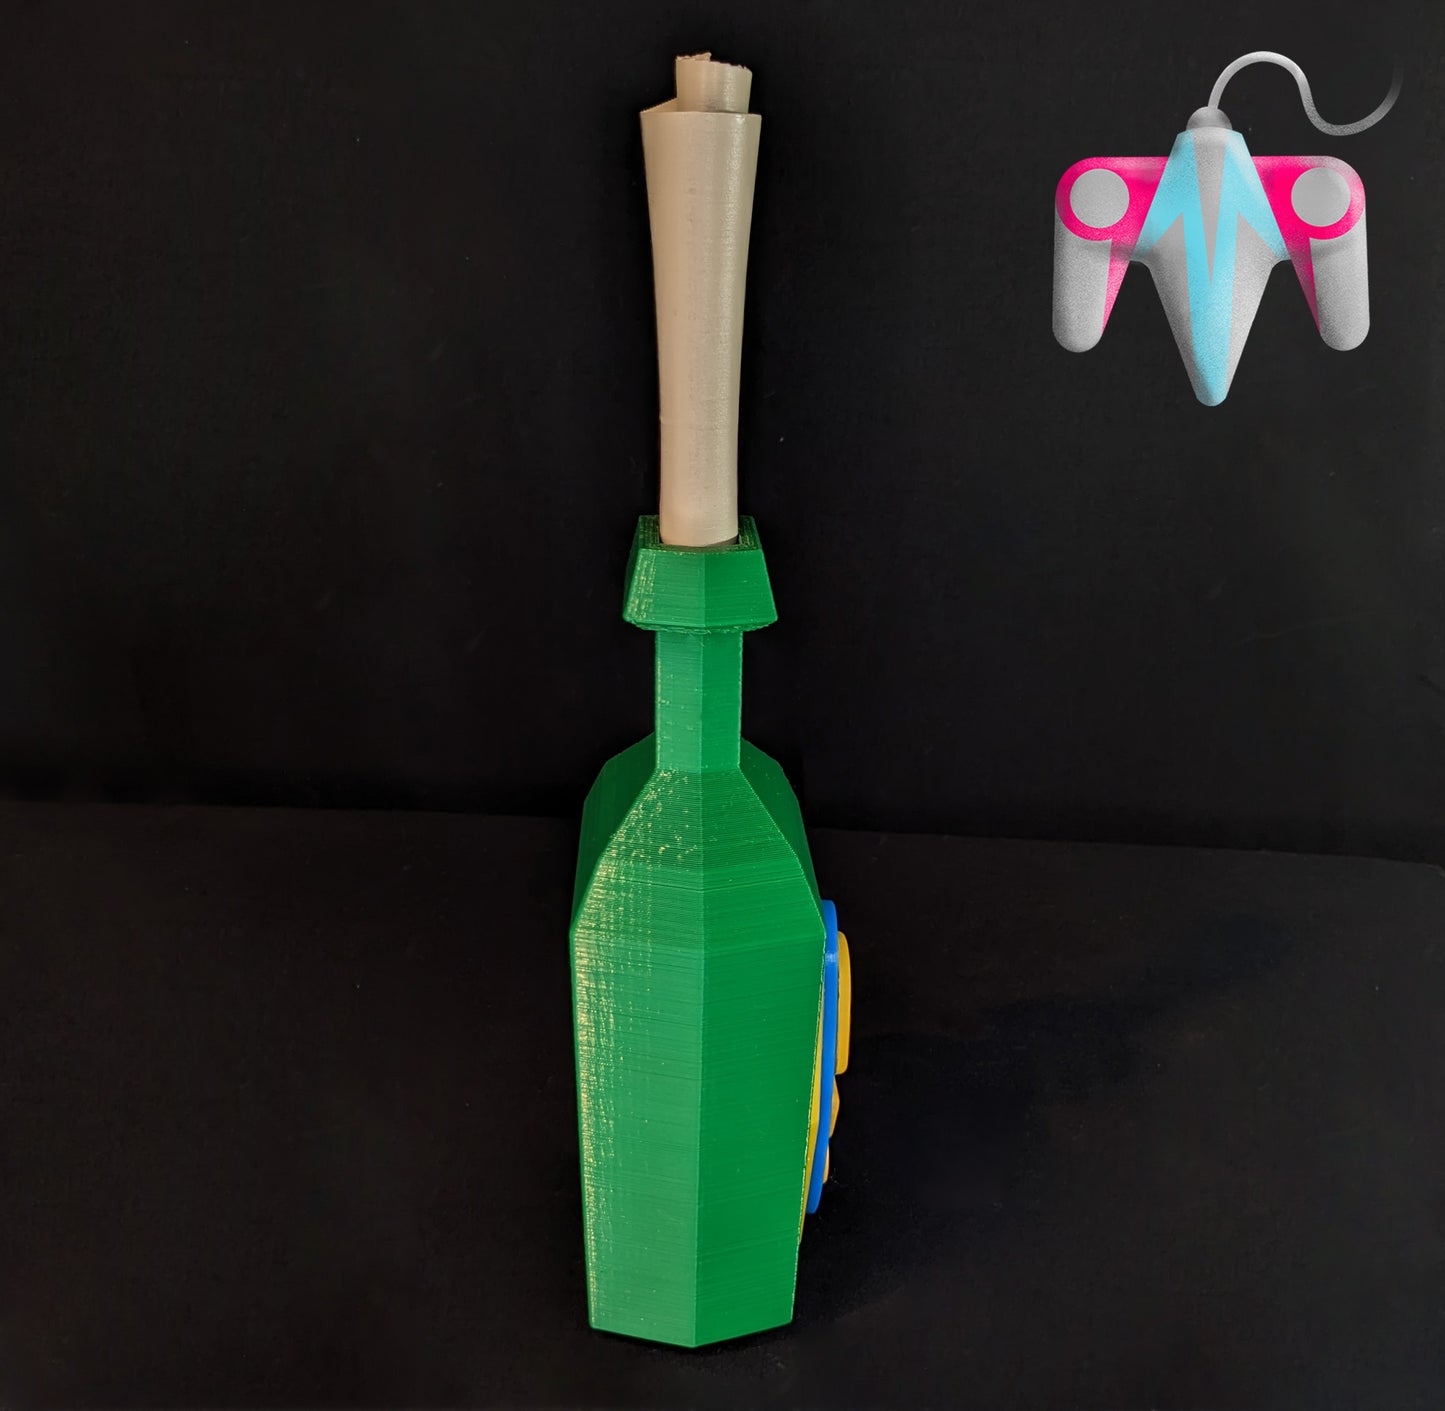 3D Printed Clue Bottle